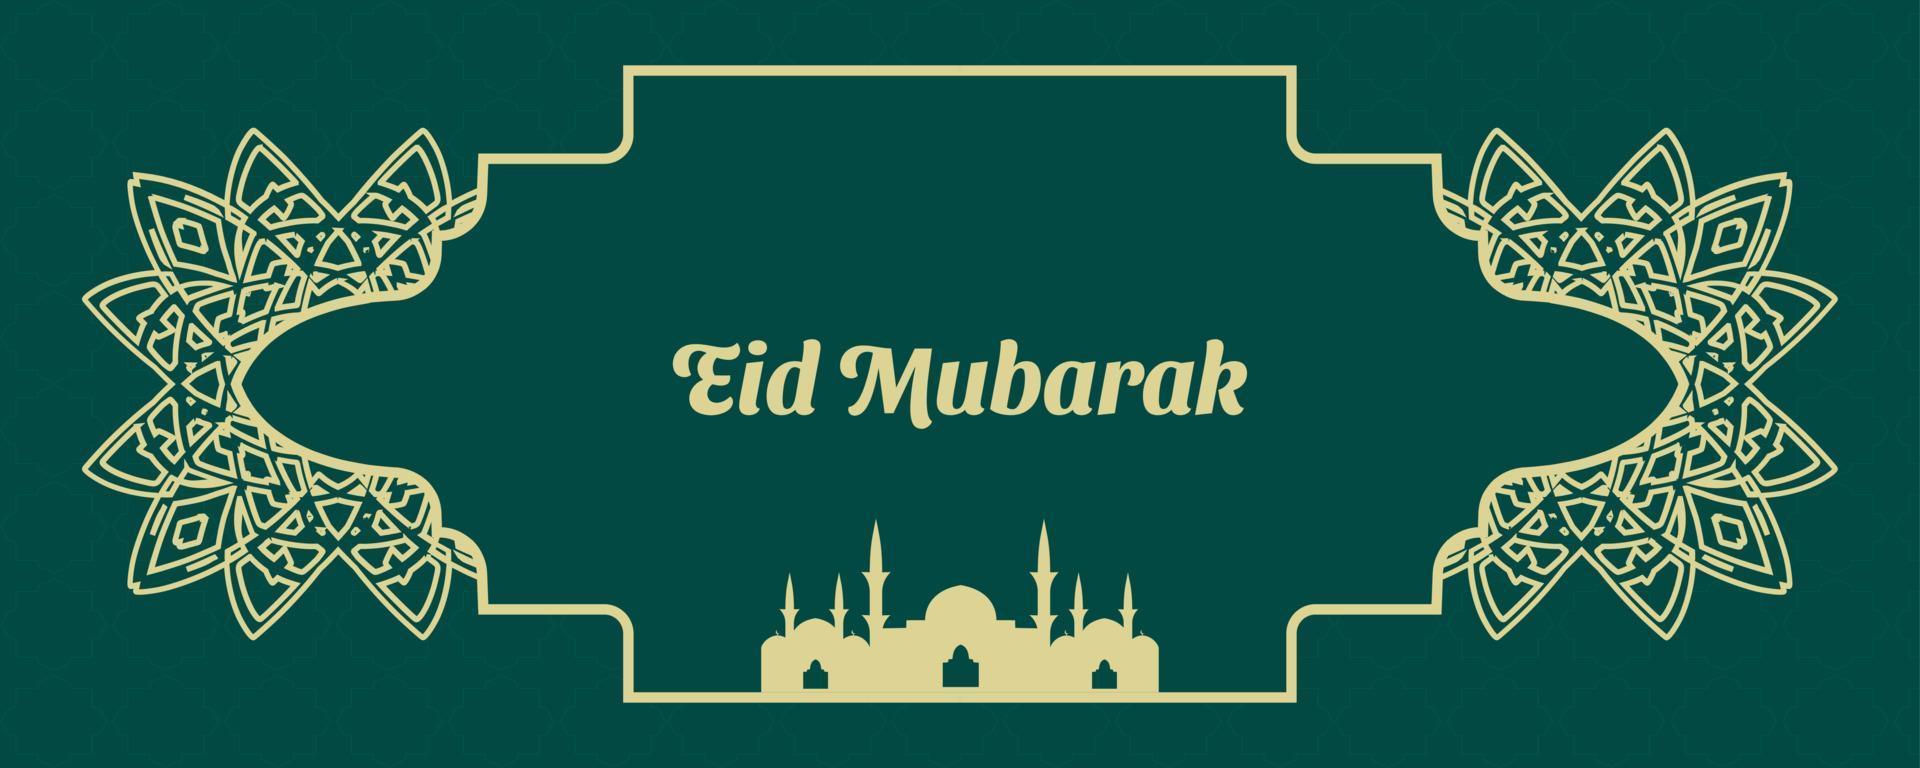 Muslim festival eid mubarak background vector